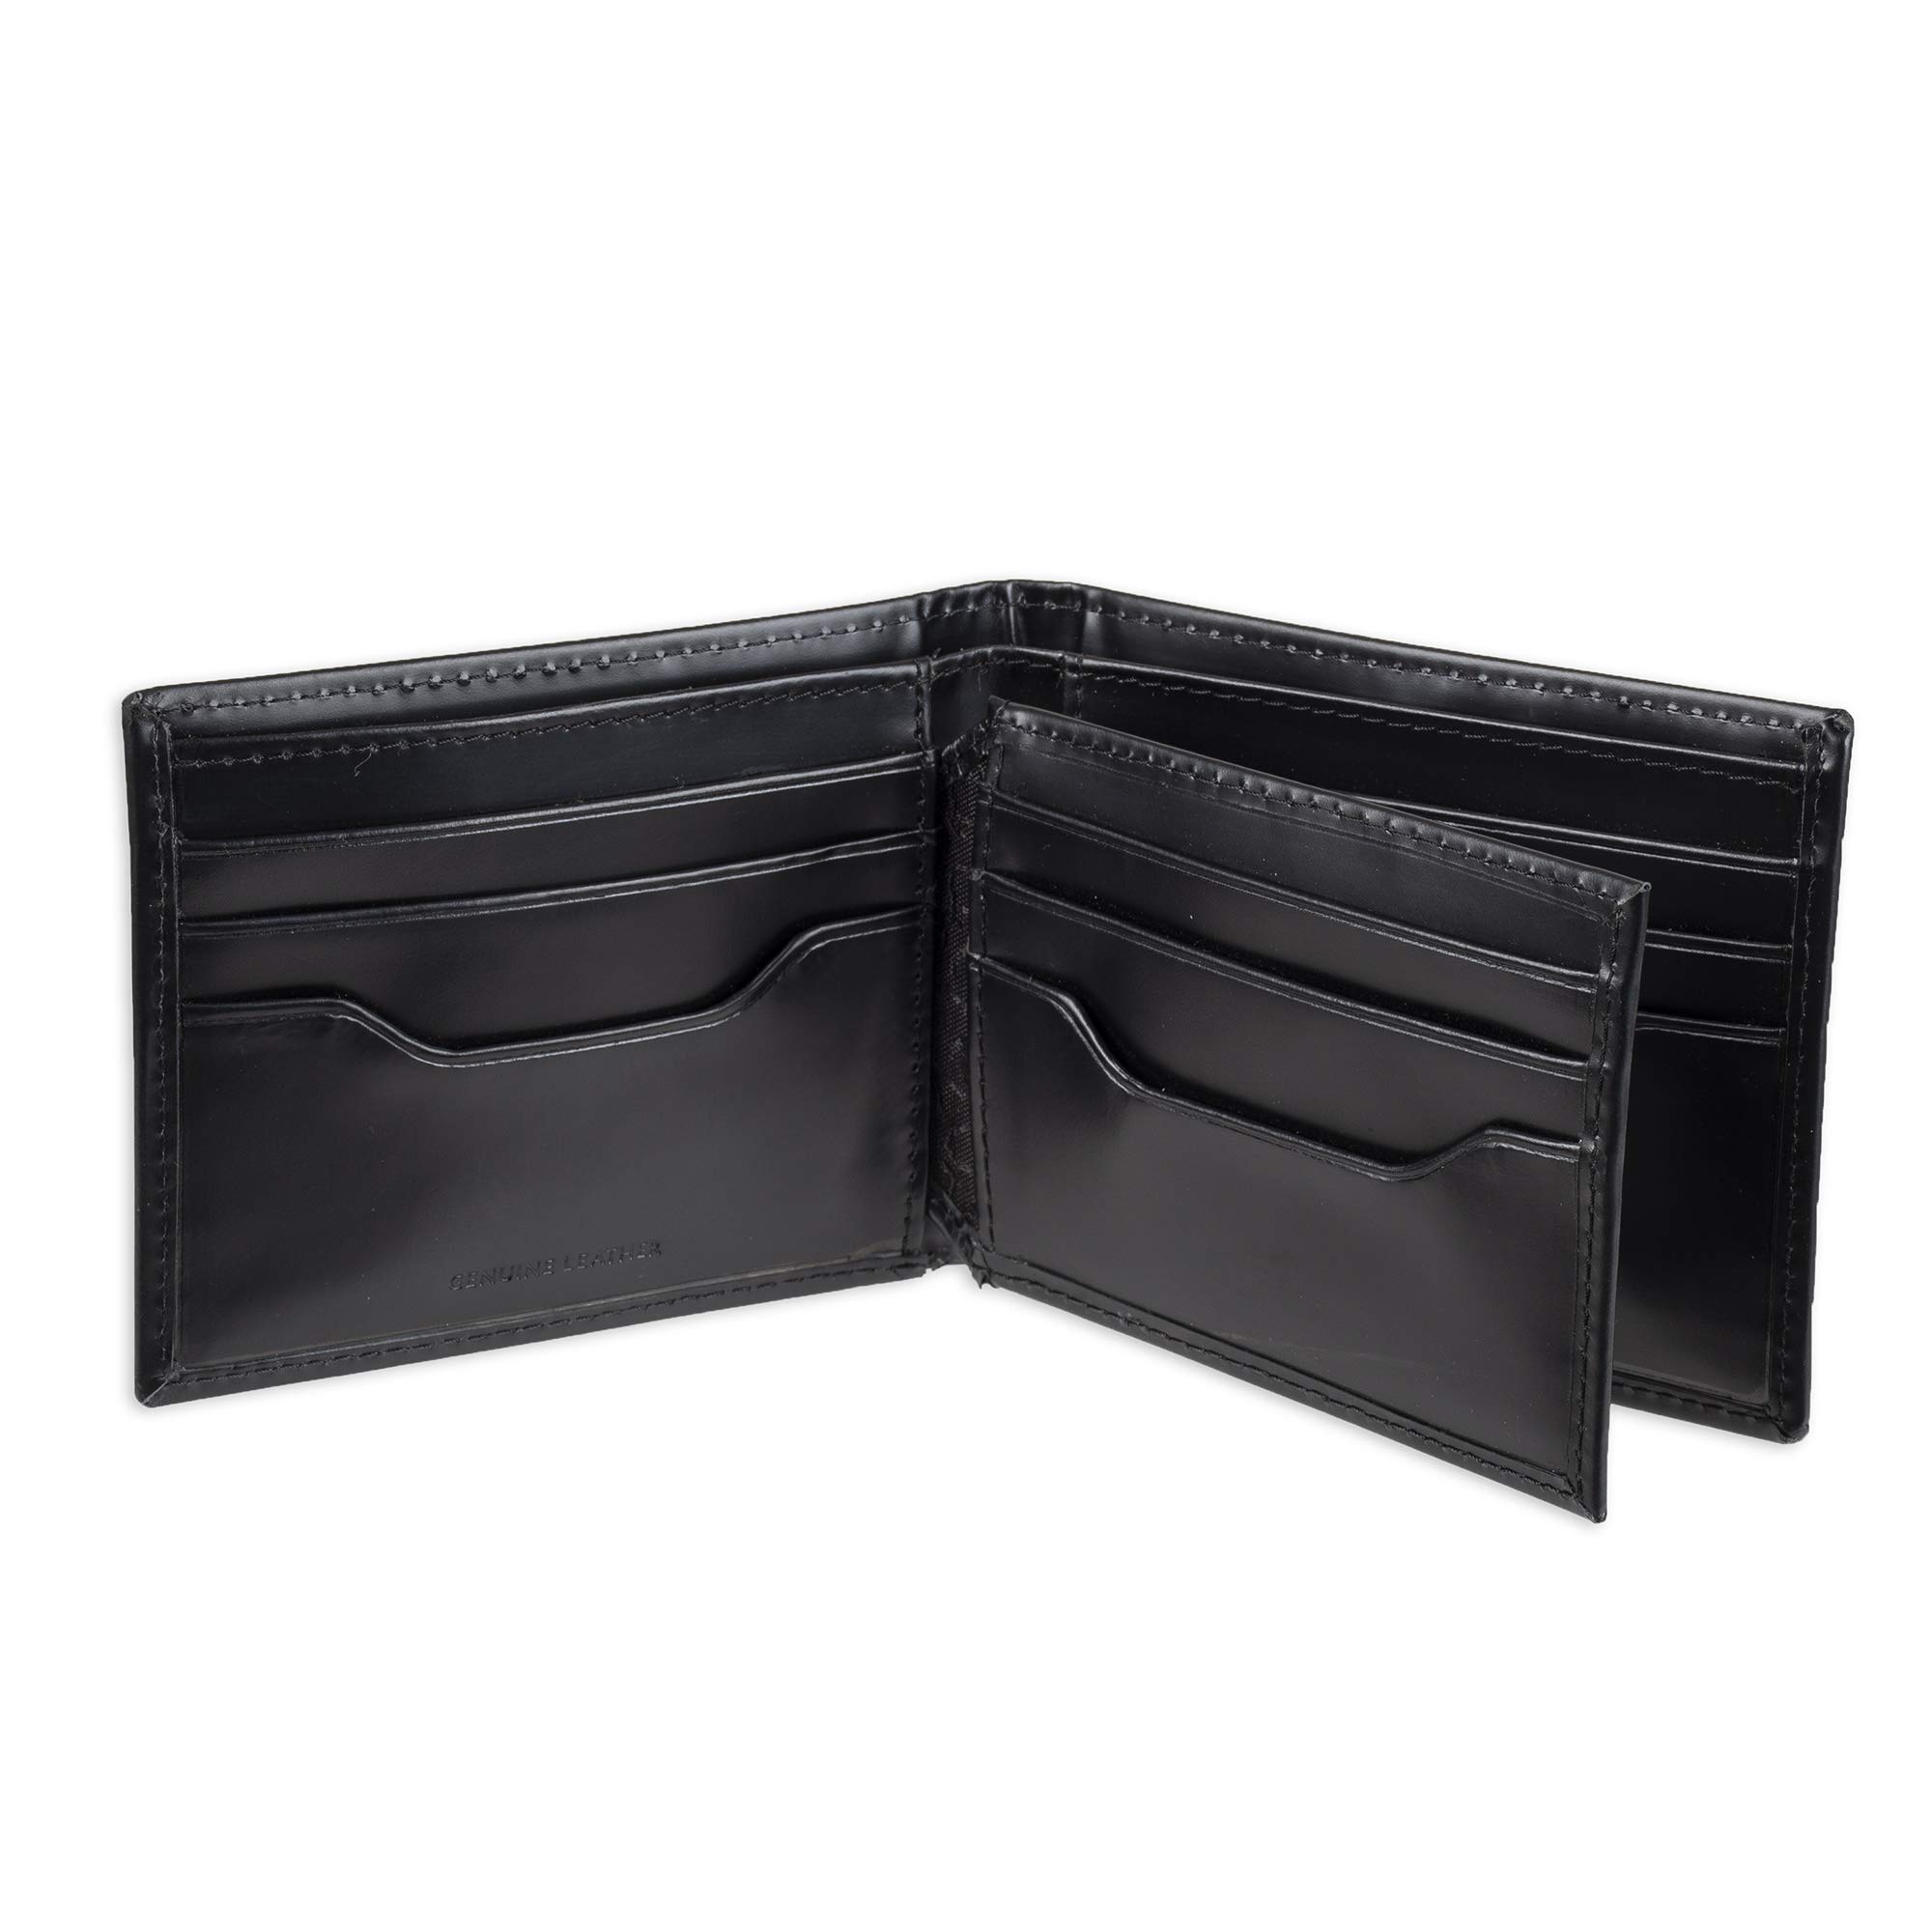 Calvin Klein Men's Wallet Sets-Minimalist Bifold and Card Cases